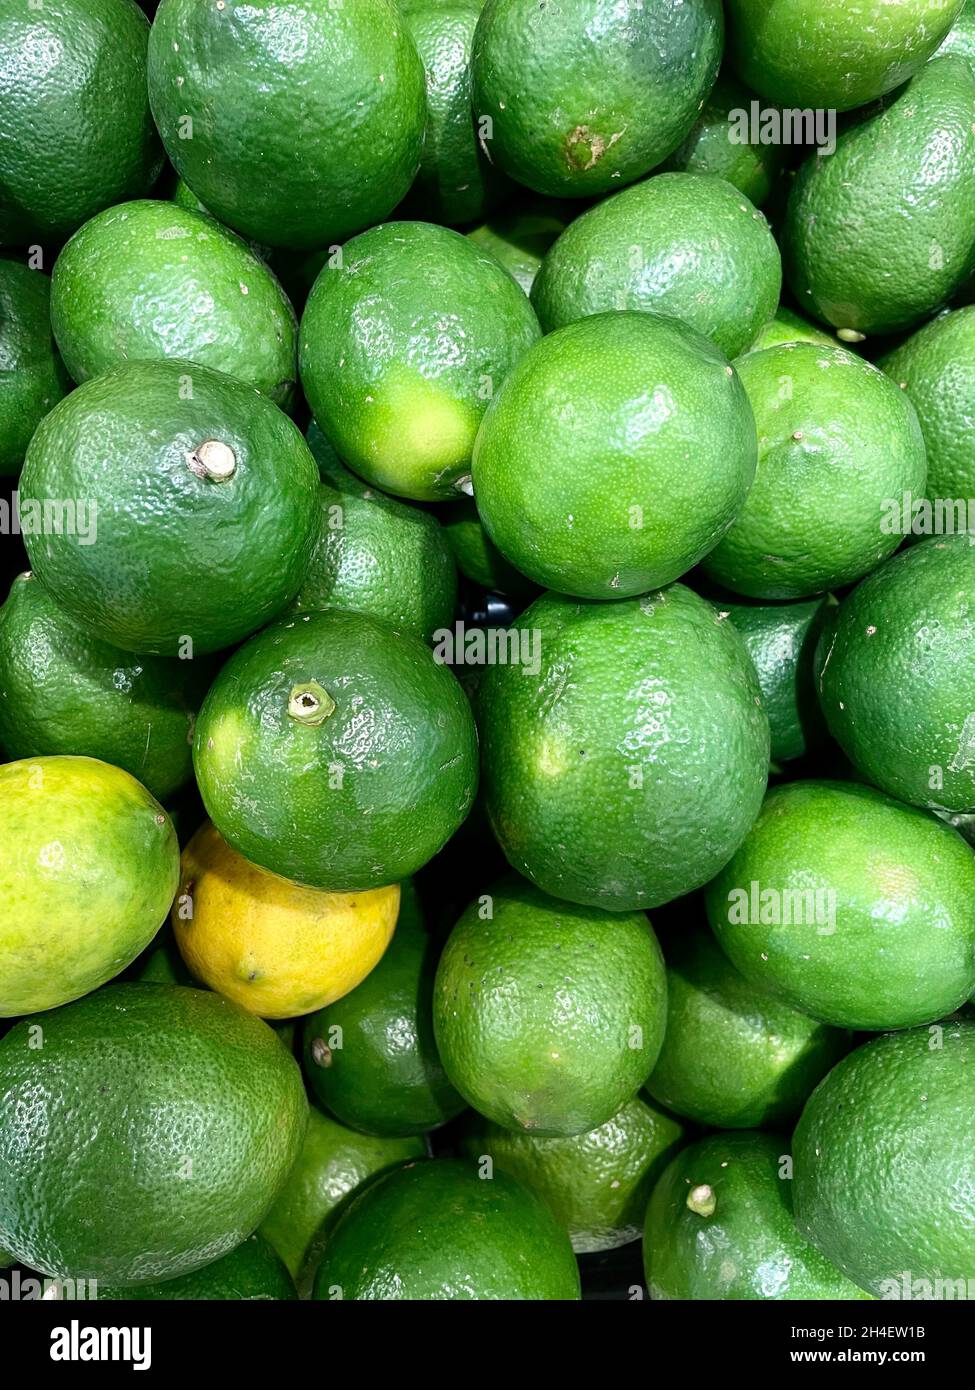 Lime o Jeruk nipis (Lat Citrus aurantifolia; Familia: Rutaceae) es un tipo de planta que pertenece a la tribu de los cítricos-naranjas, esparcida en Asia y Central Foto de stock